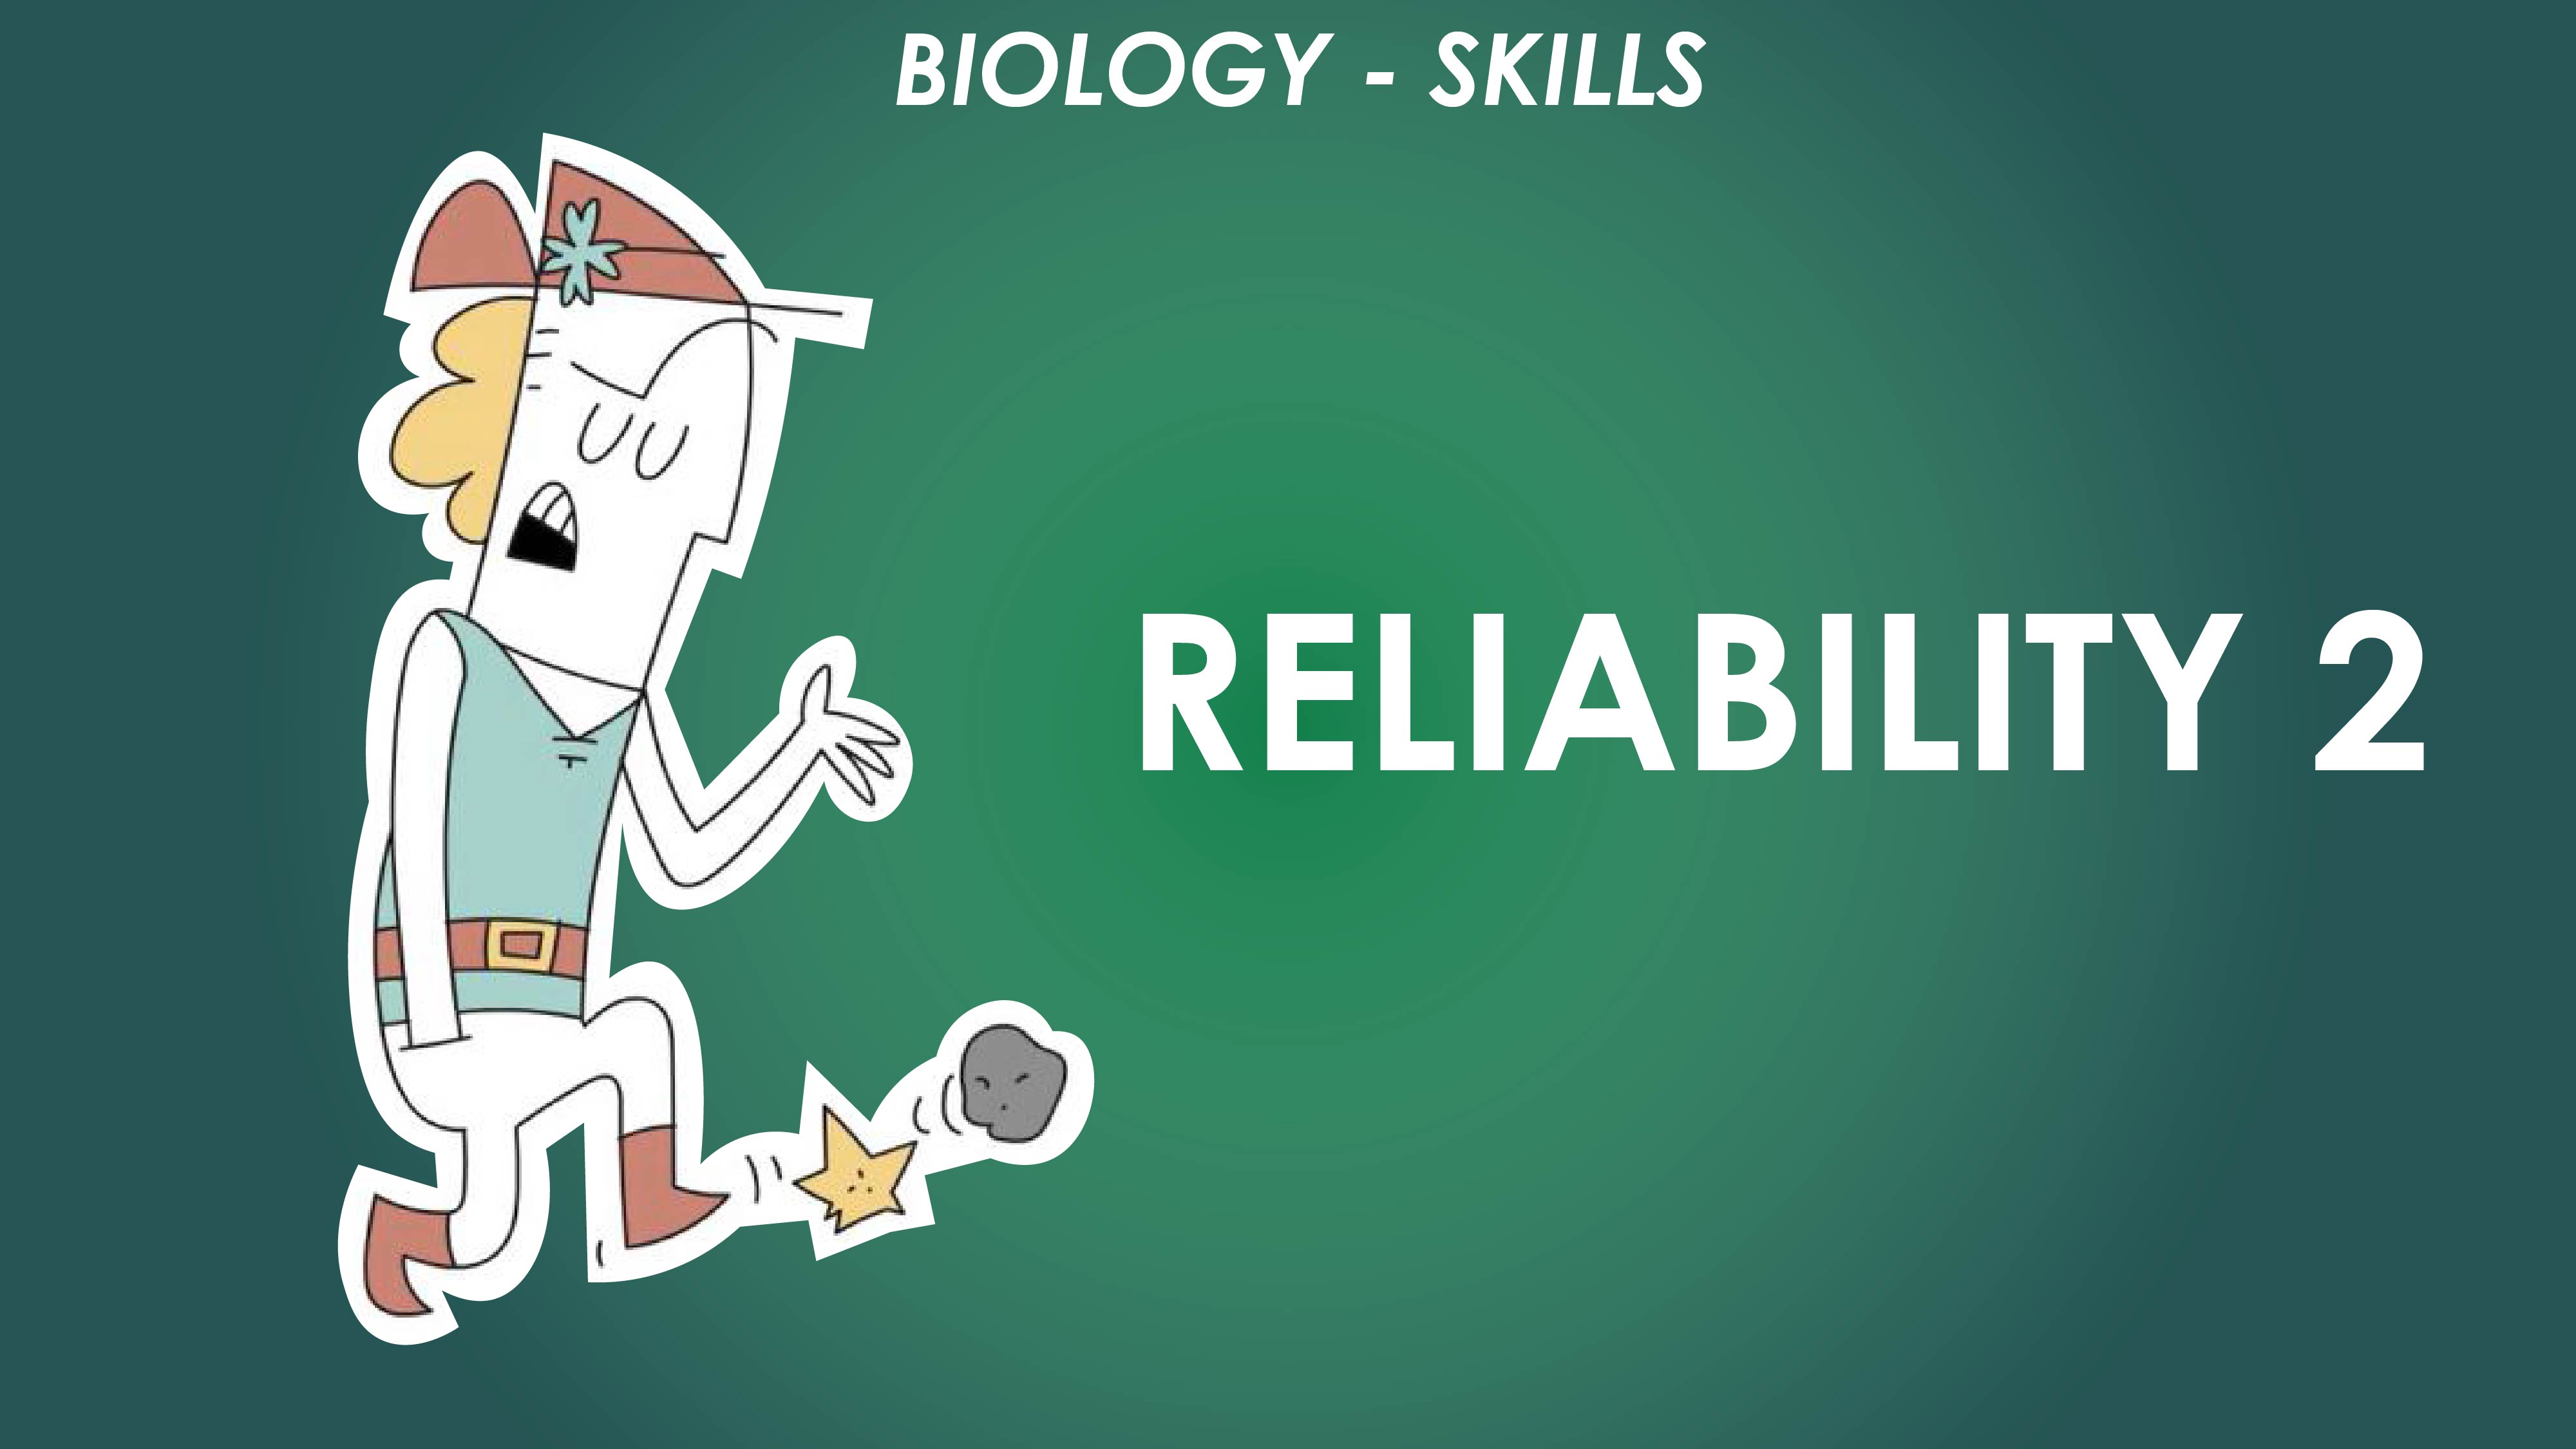 Reliability 2 - Biology Skills